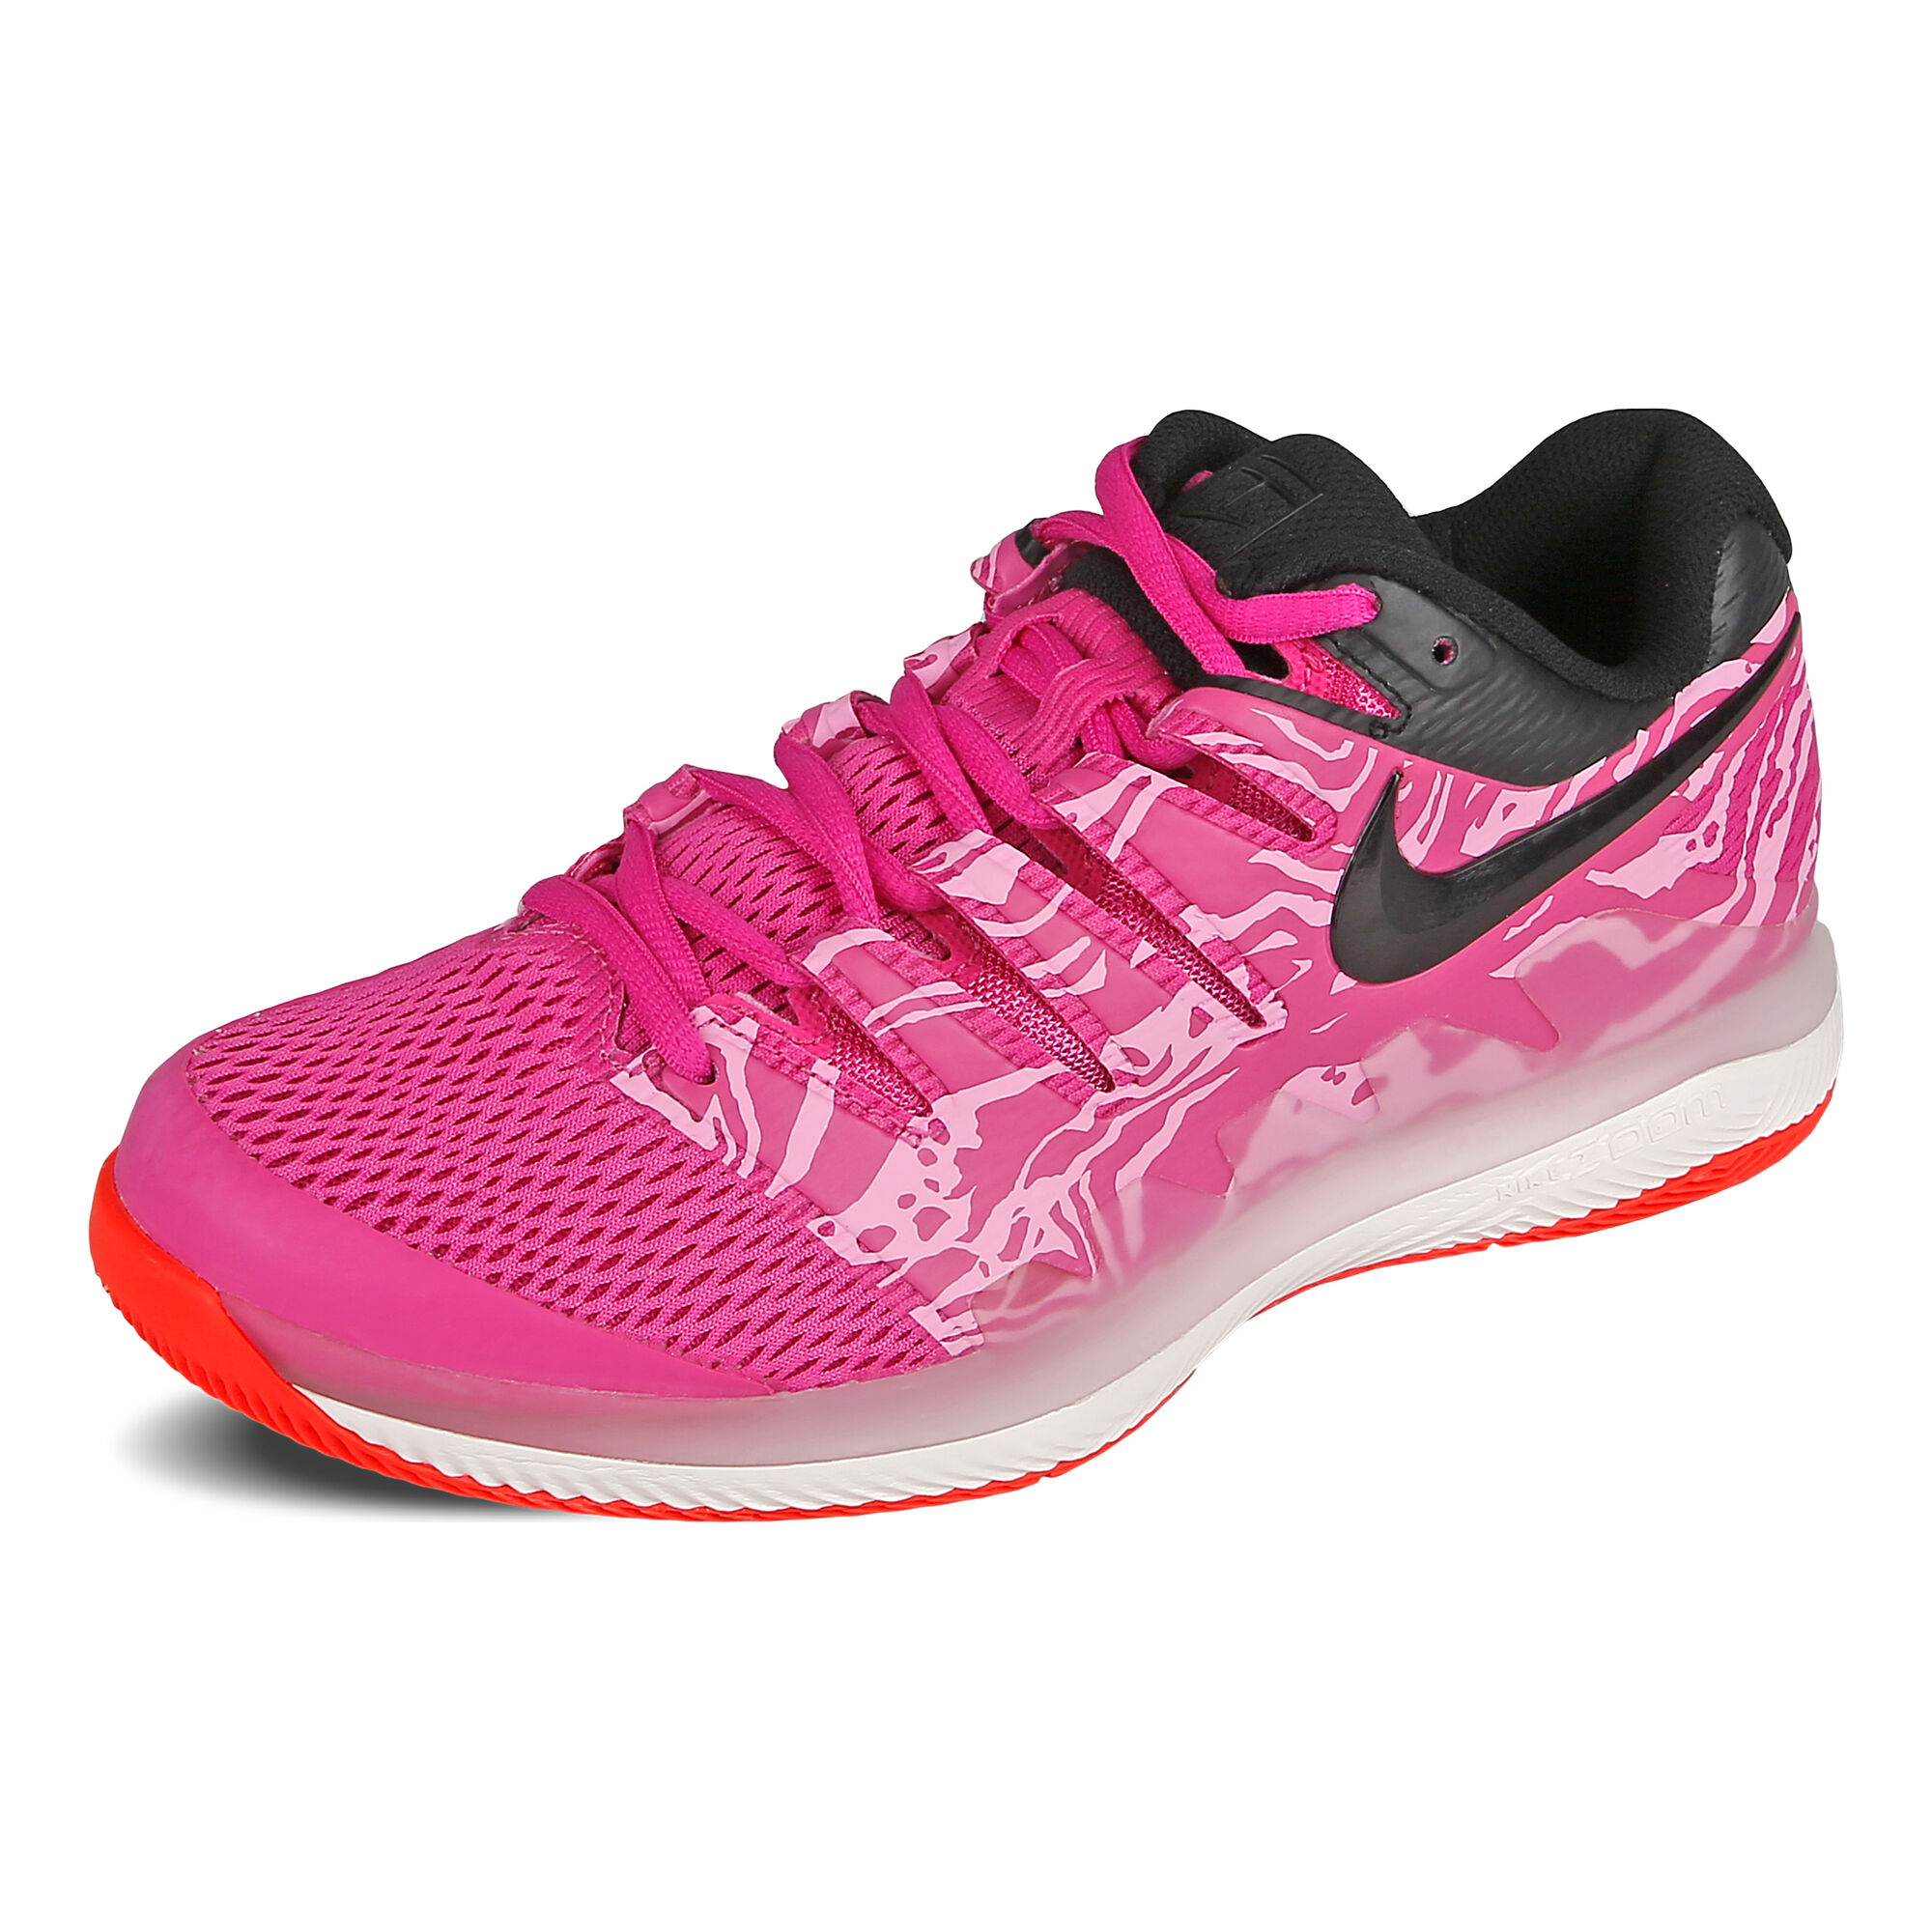 Buy Nike Air Zoom Vapor X All Court Shoe Women Pink Pink online